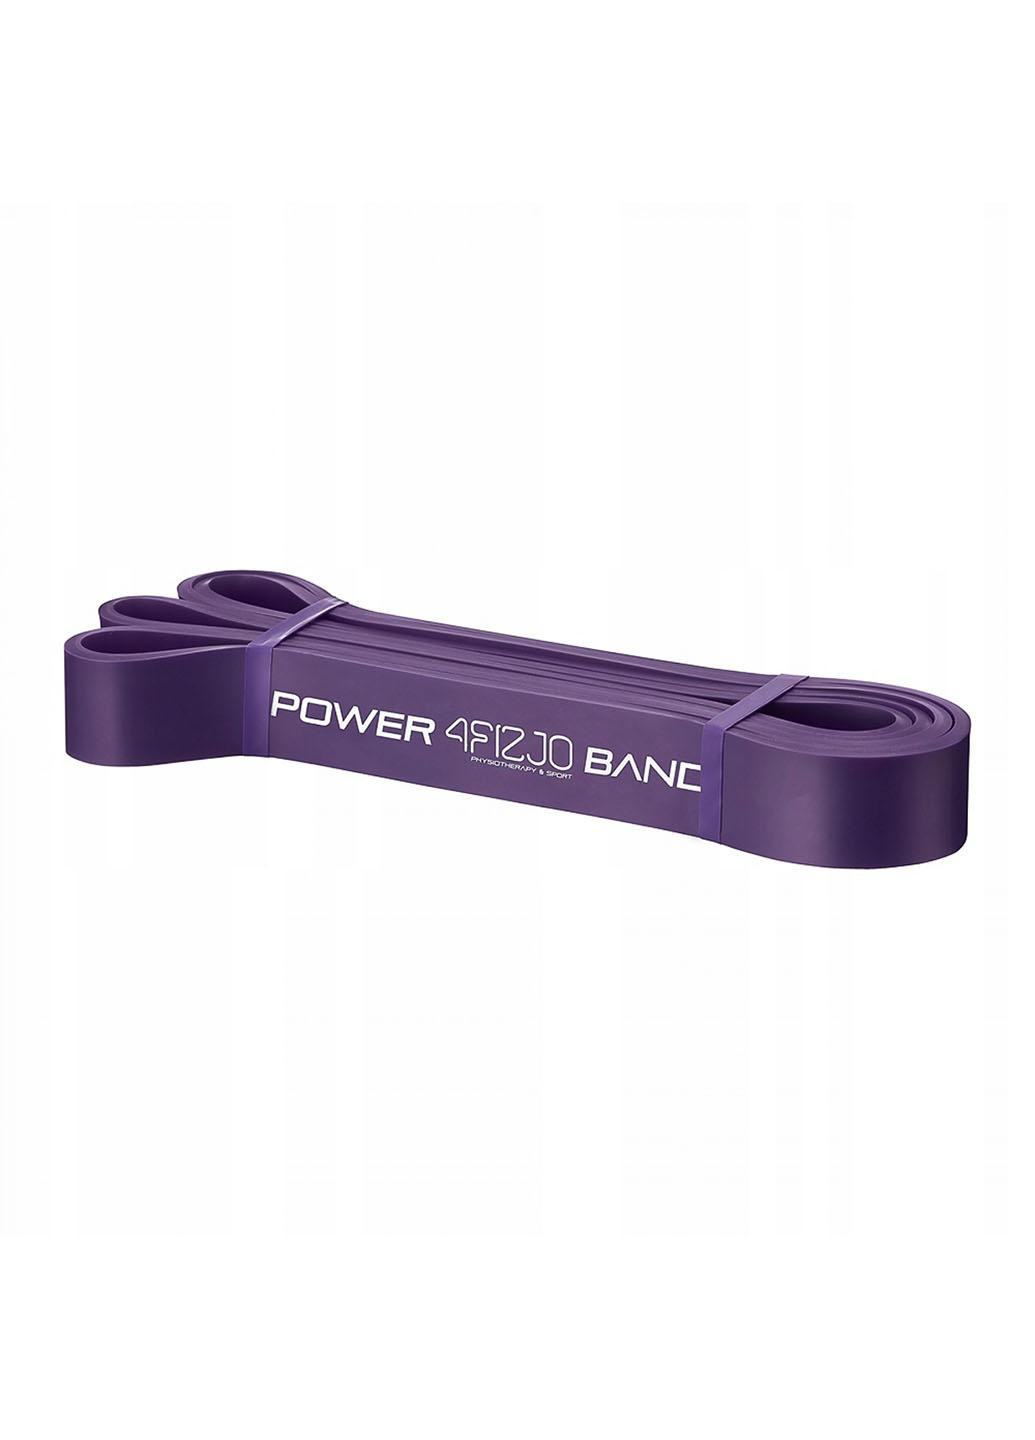 Эспандер-петля Power Band 6-46 кг (резина для фитнеса и спорта) набор 6 шт 4FJ0064 4FIZJO (260061022)